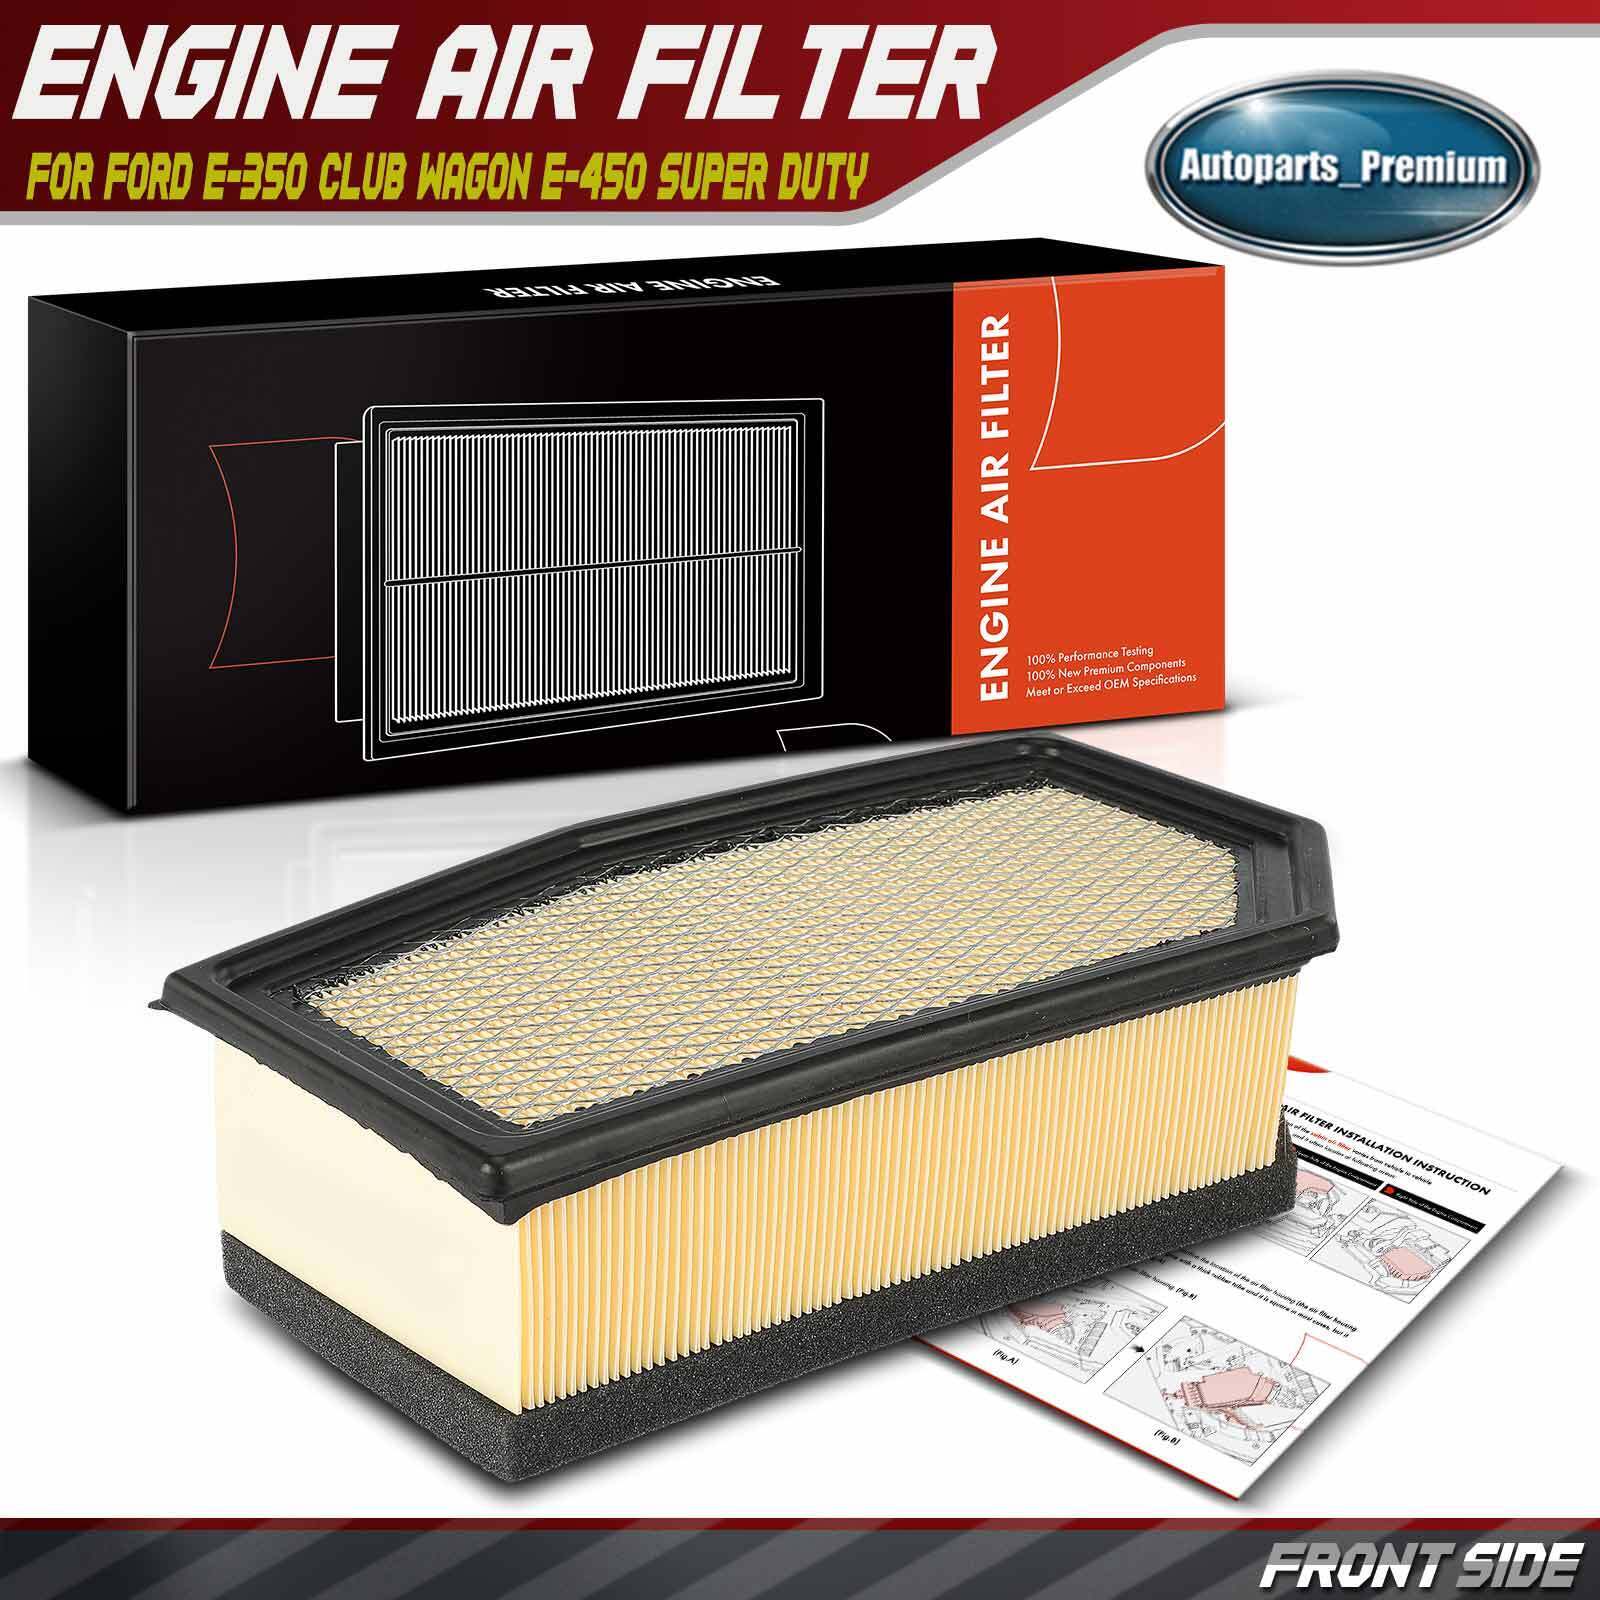 Engine Air Filter for Ford E-350 Club Wagon 04-05 E-350 450 Super Duty 2004-2010